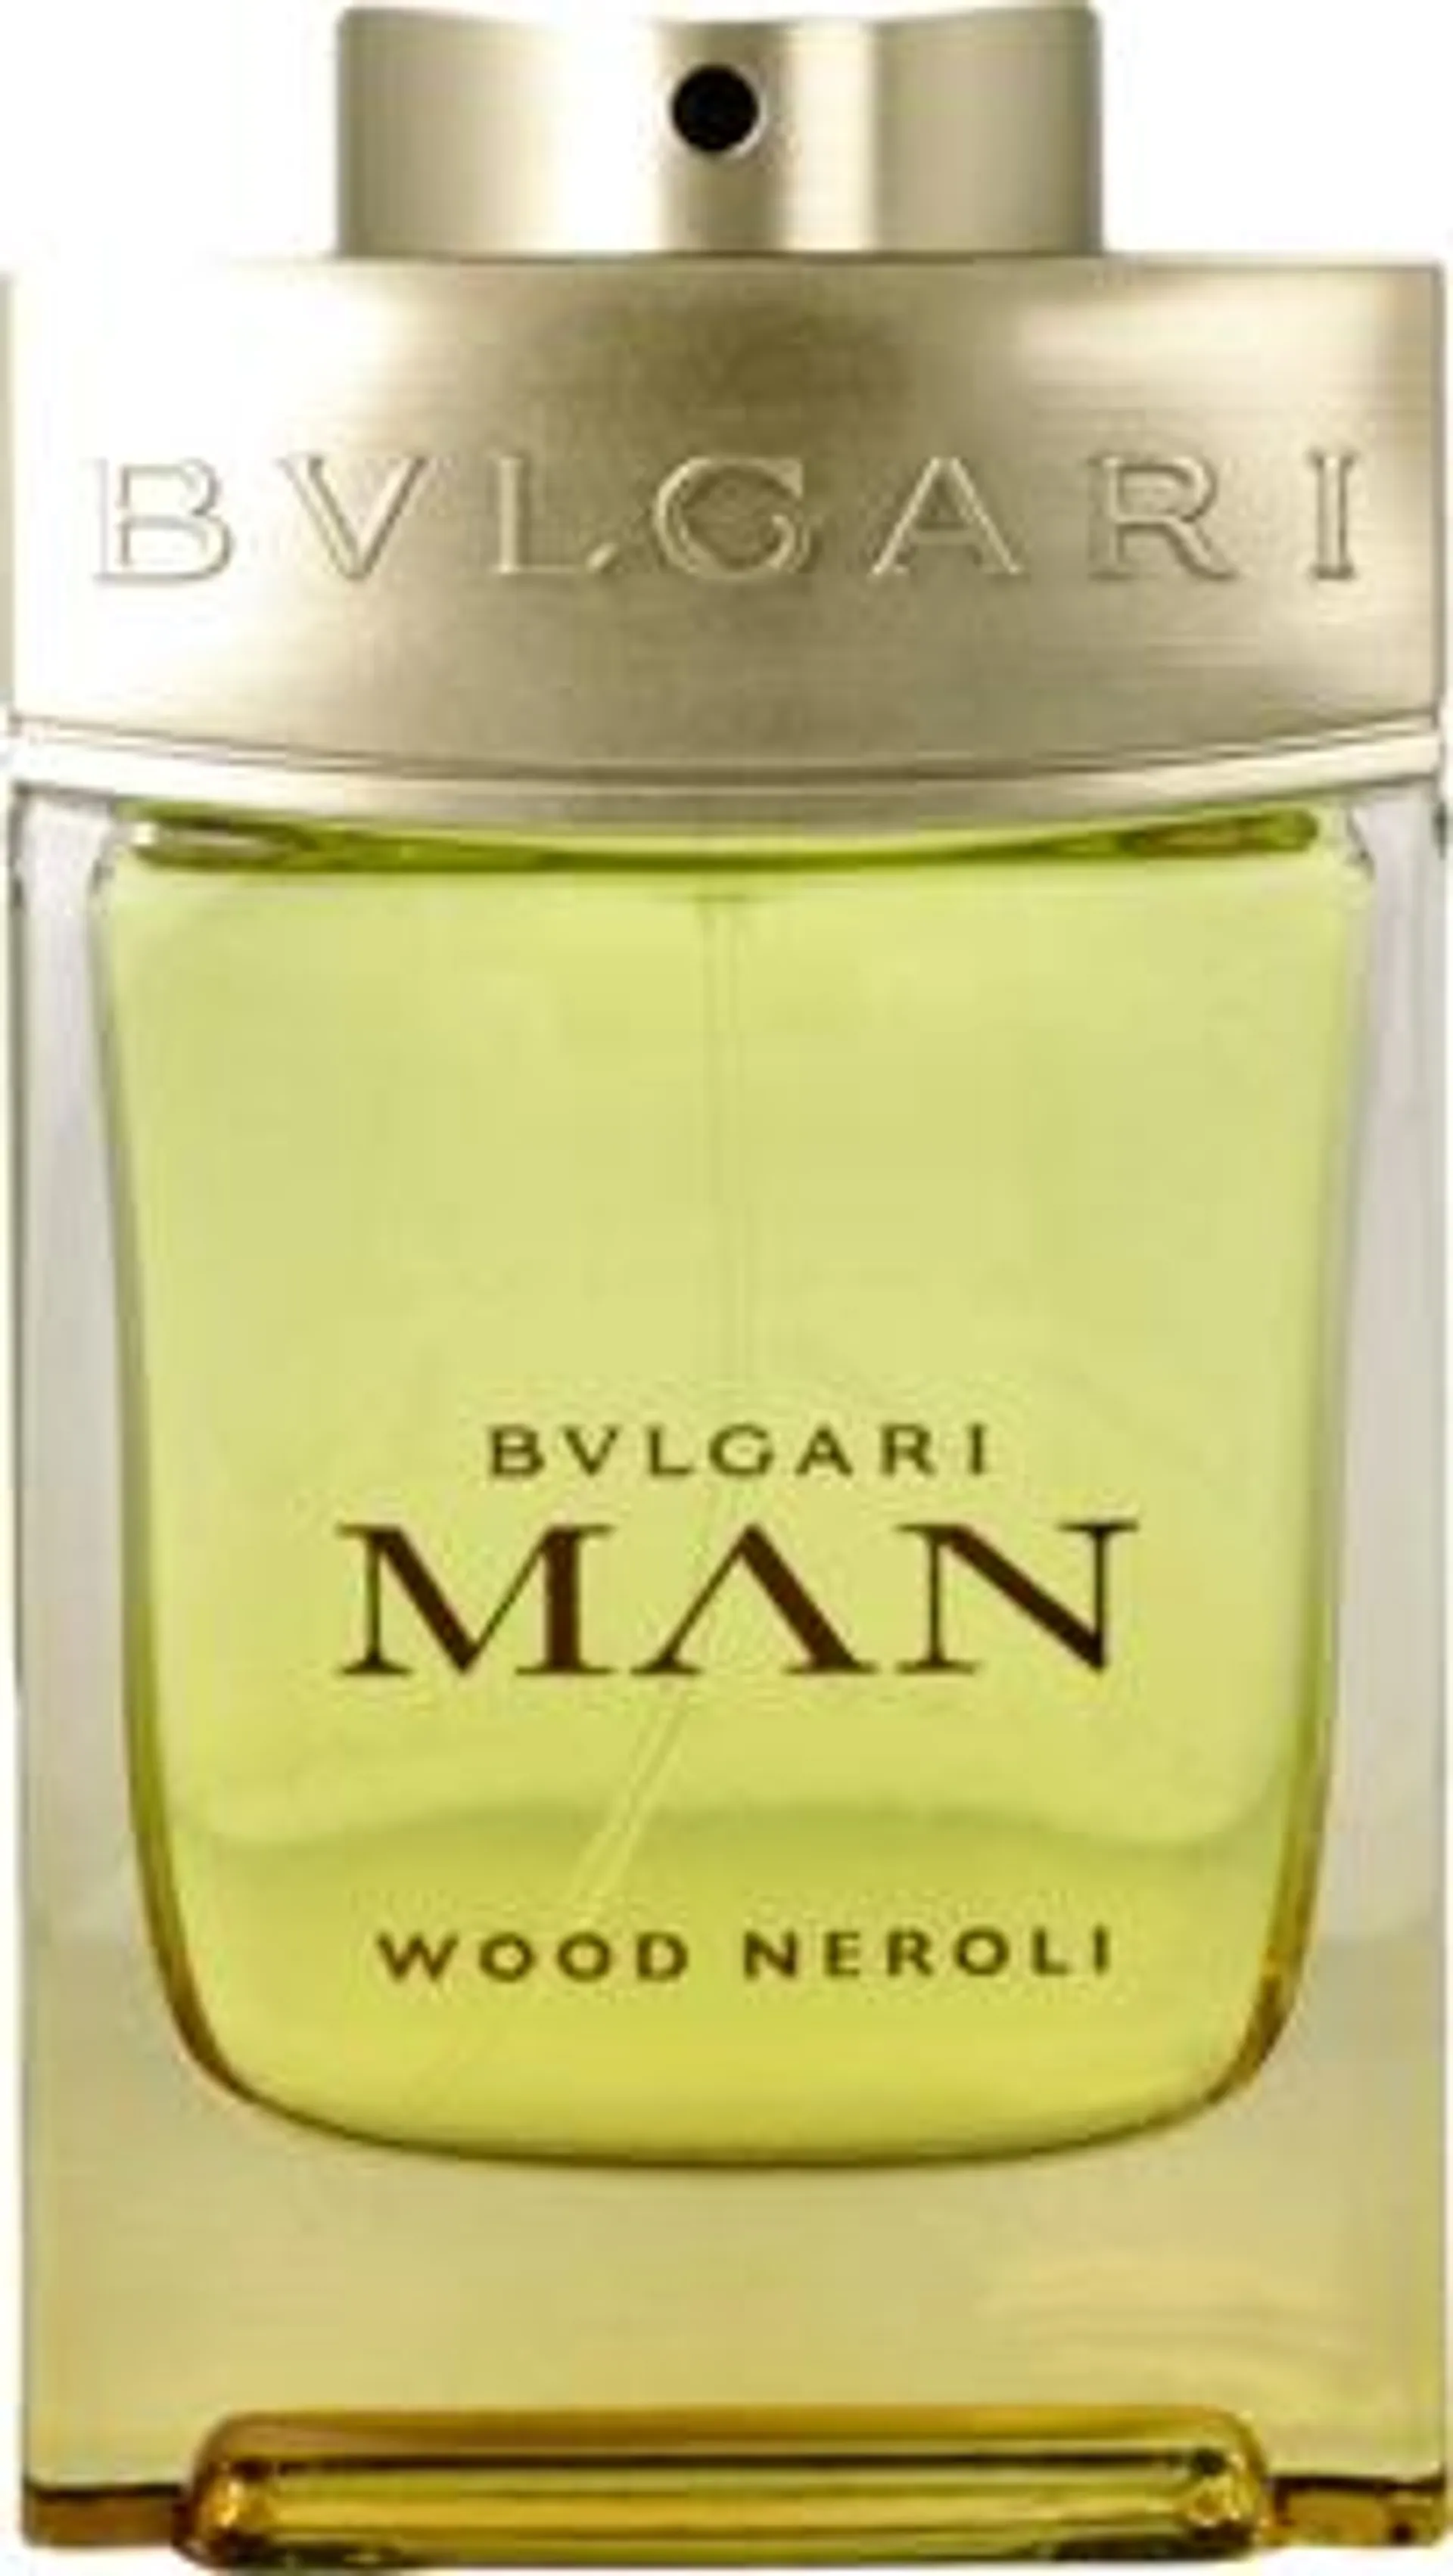 BVLGARI Wood Neroli woda perfumowana dla mężczyzn 60 ml, nr kat. 422447